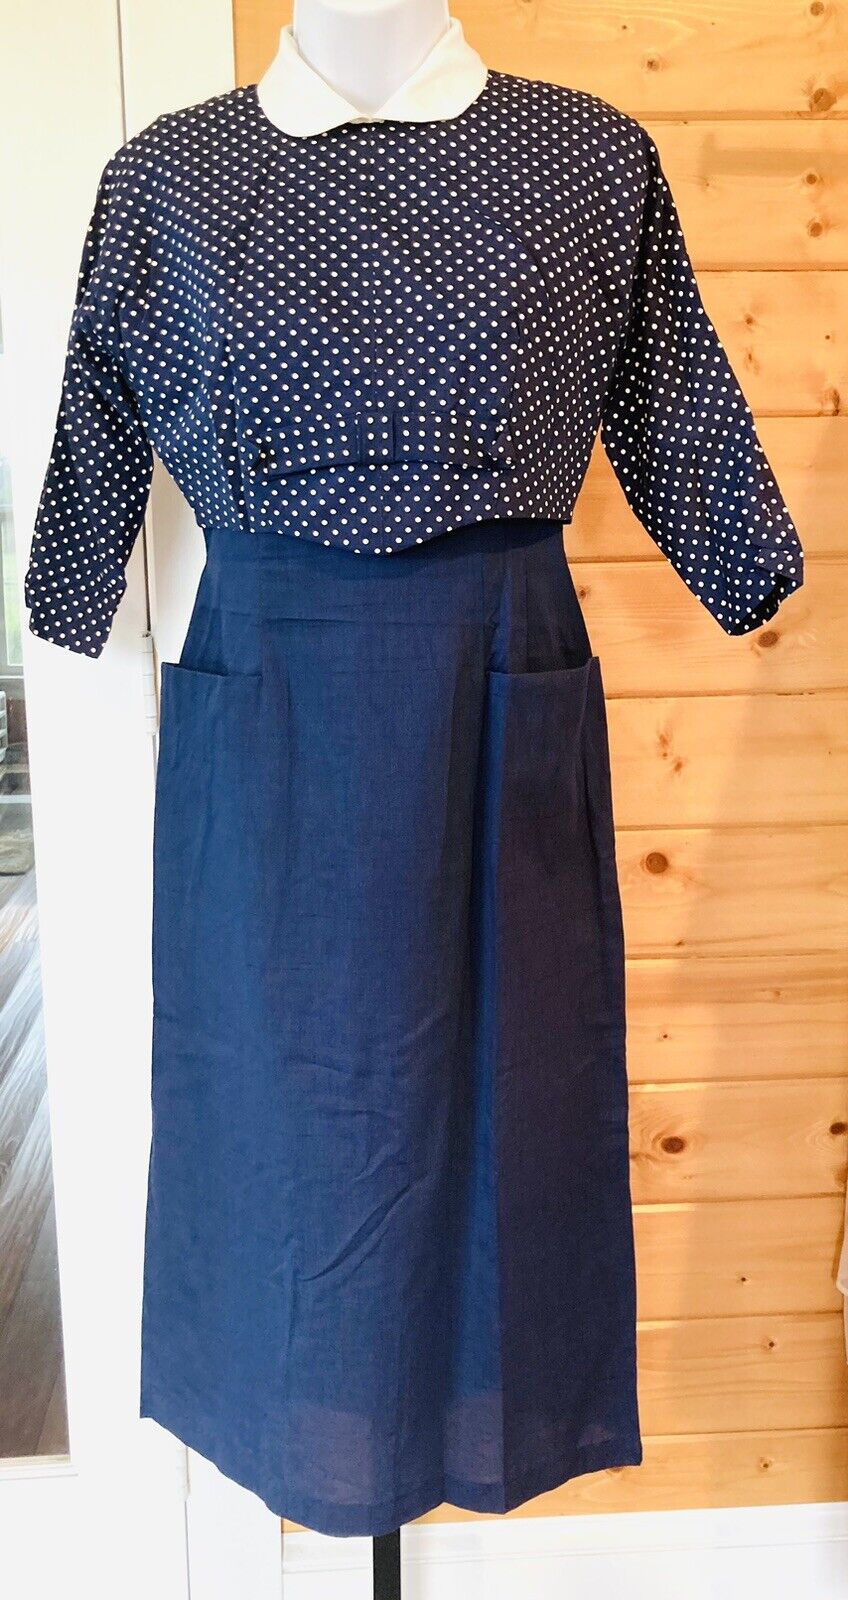 Vintage 1950s wiggle dress blue w white polka dots, bolero jacket B 34